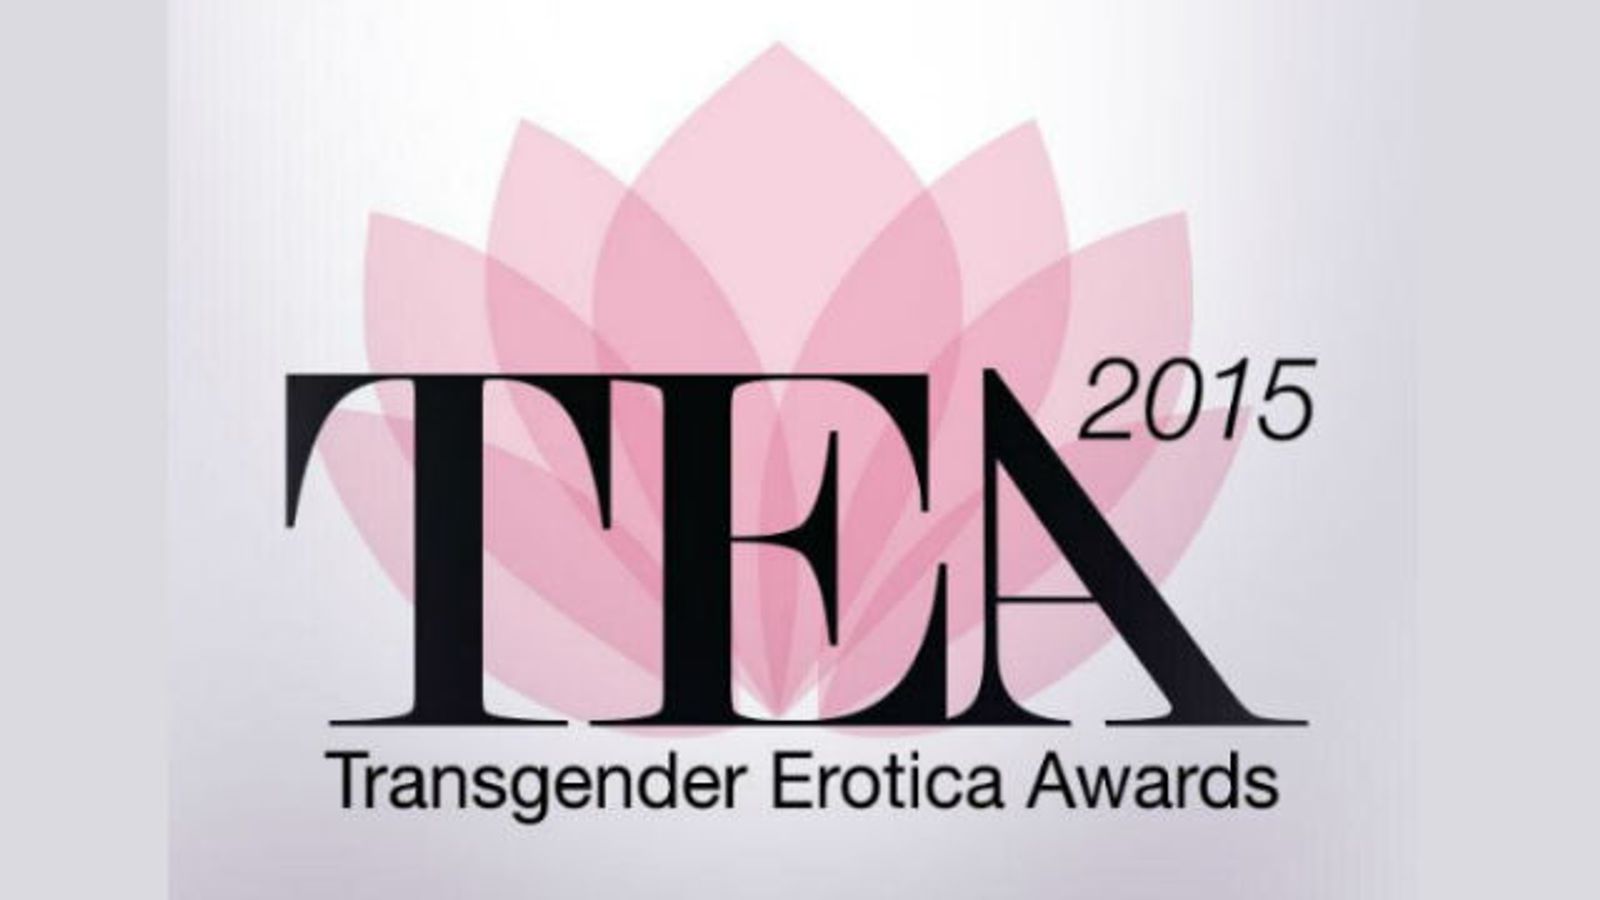 Transgender Erotica Awards Set for Feb 15 at Avalon Hollywood